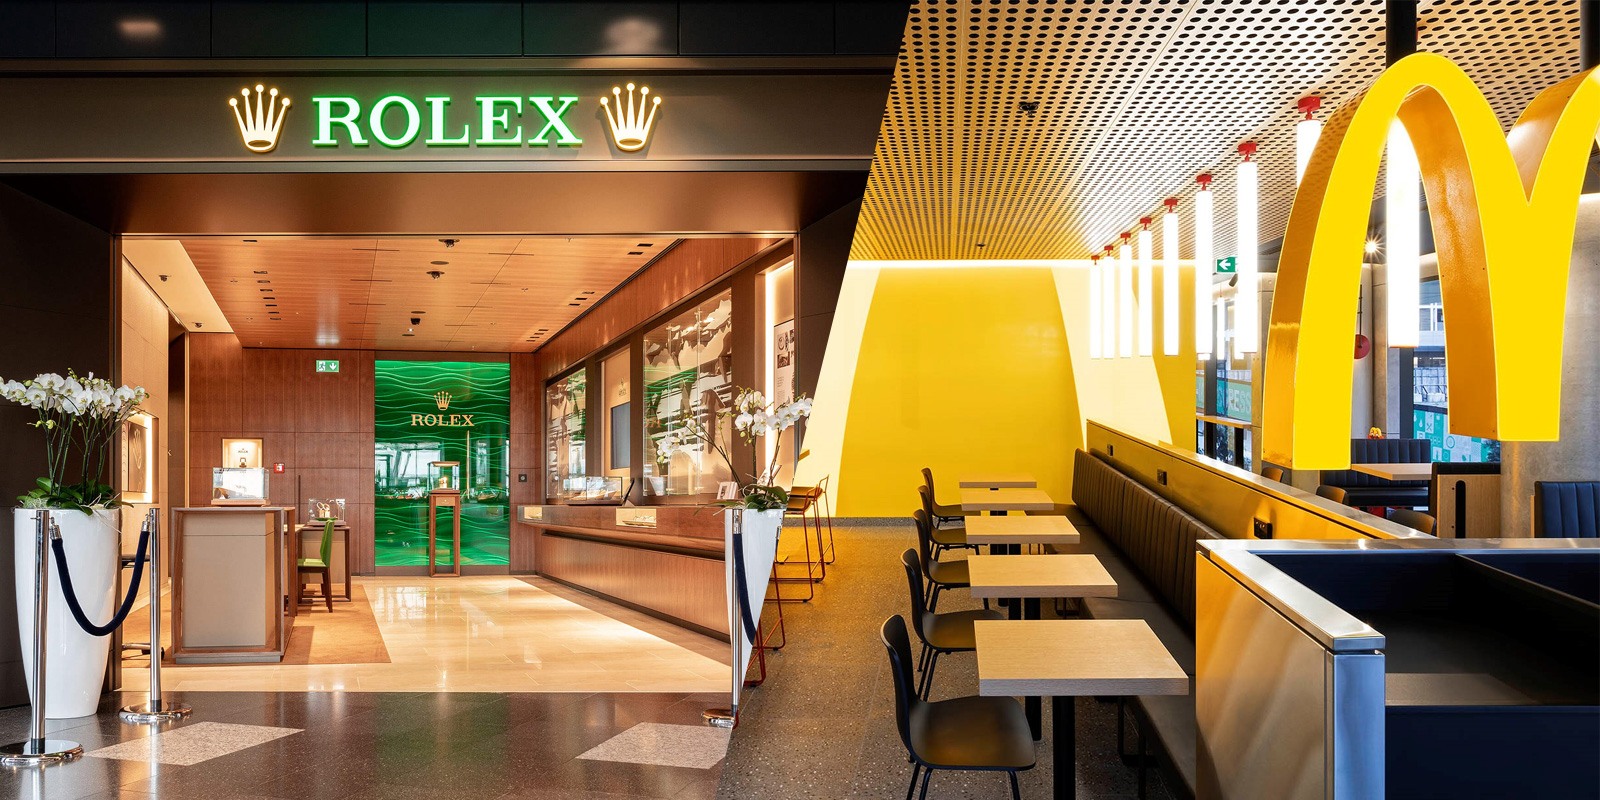 Comparison of the branding between Rolex and McDonalds